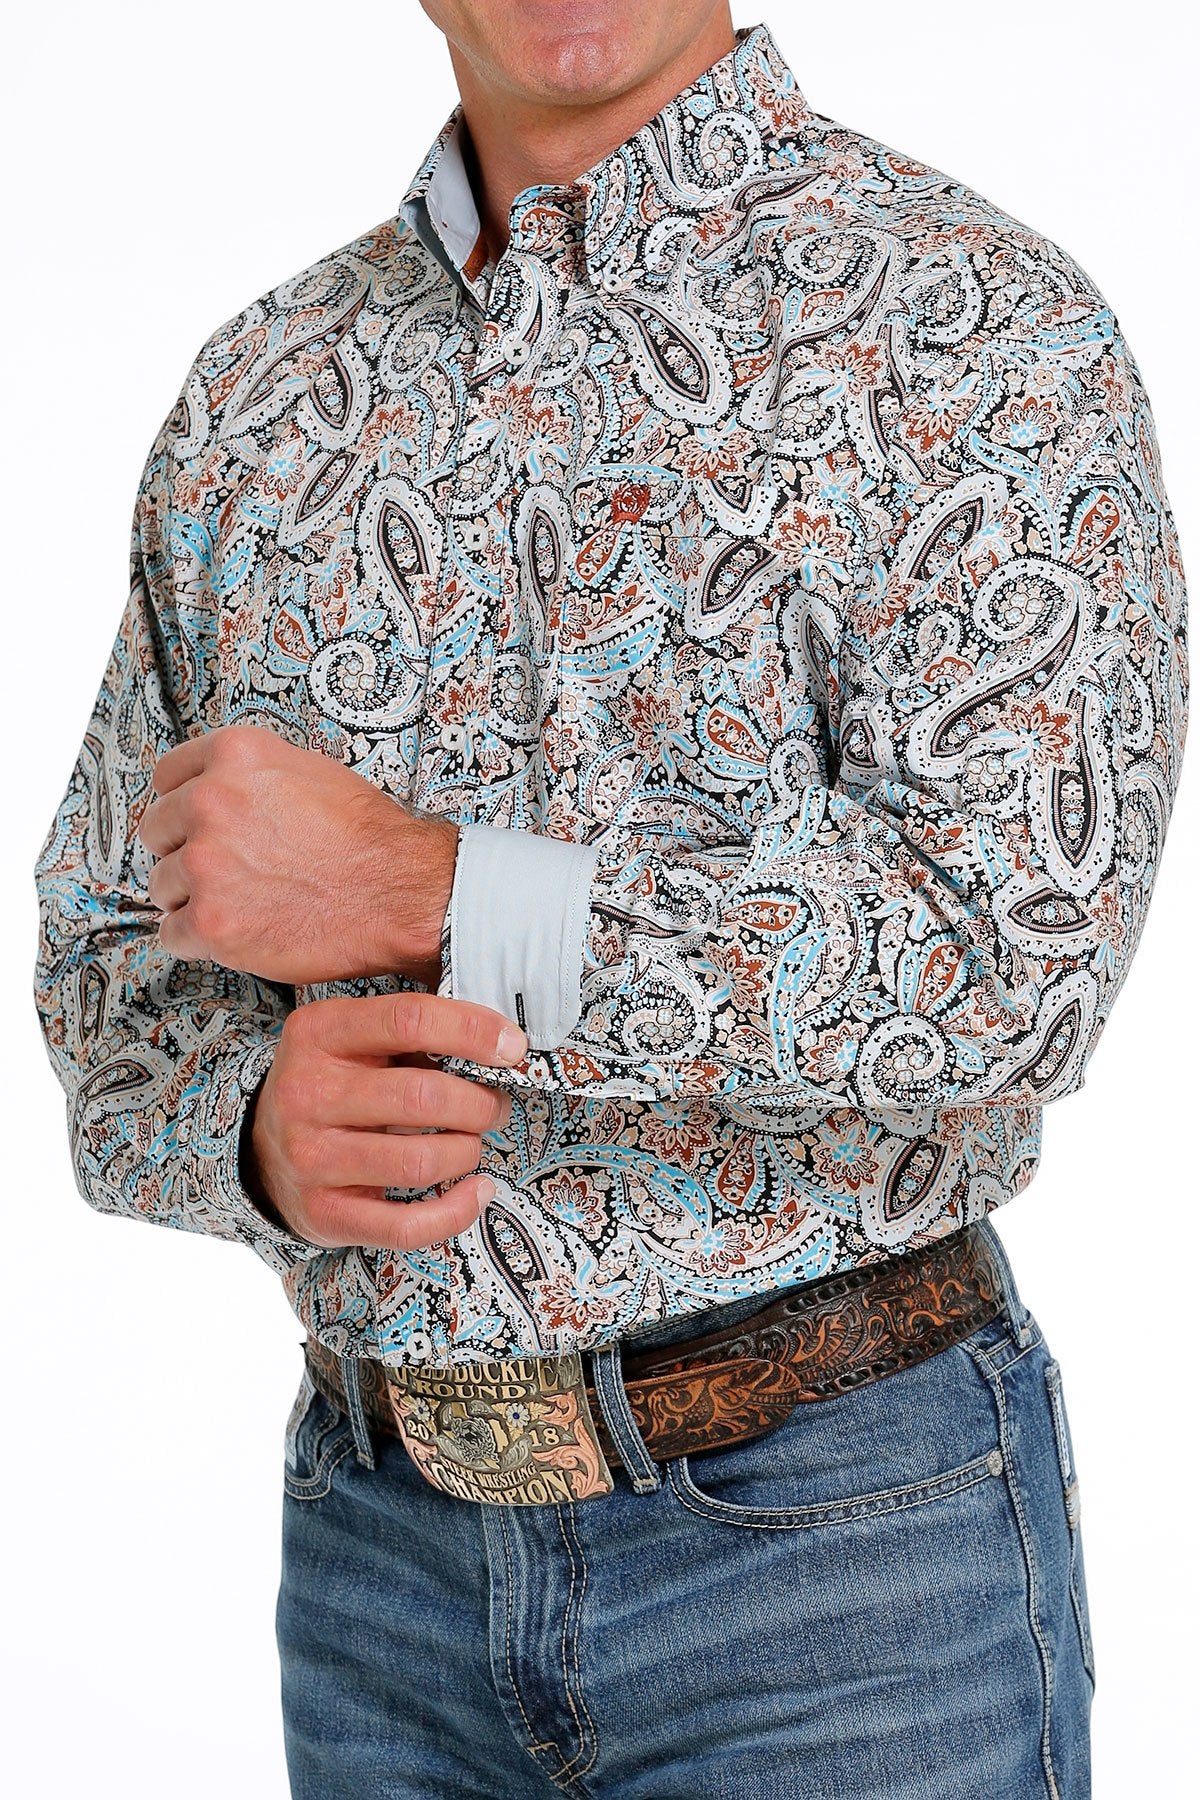 Cinch Multi Color Paisley Print - Mens Shirt - Mtw1105618 - S